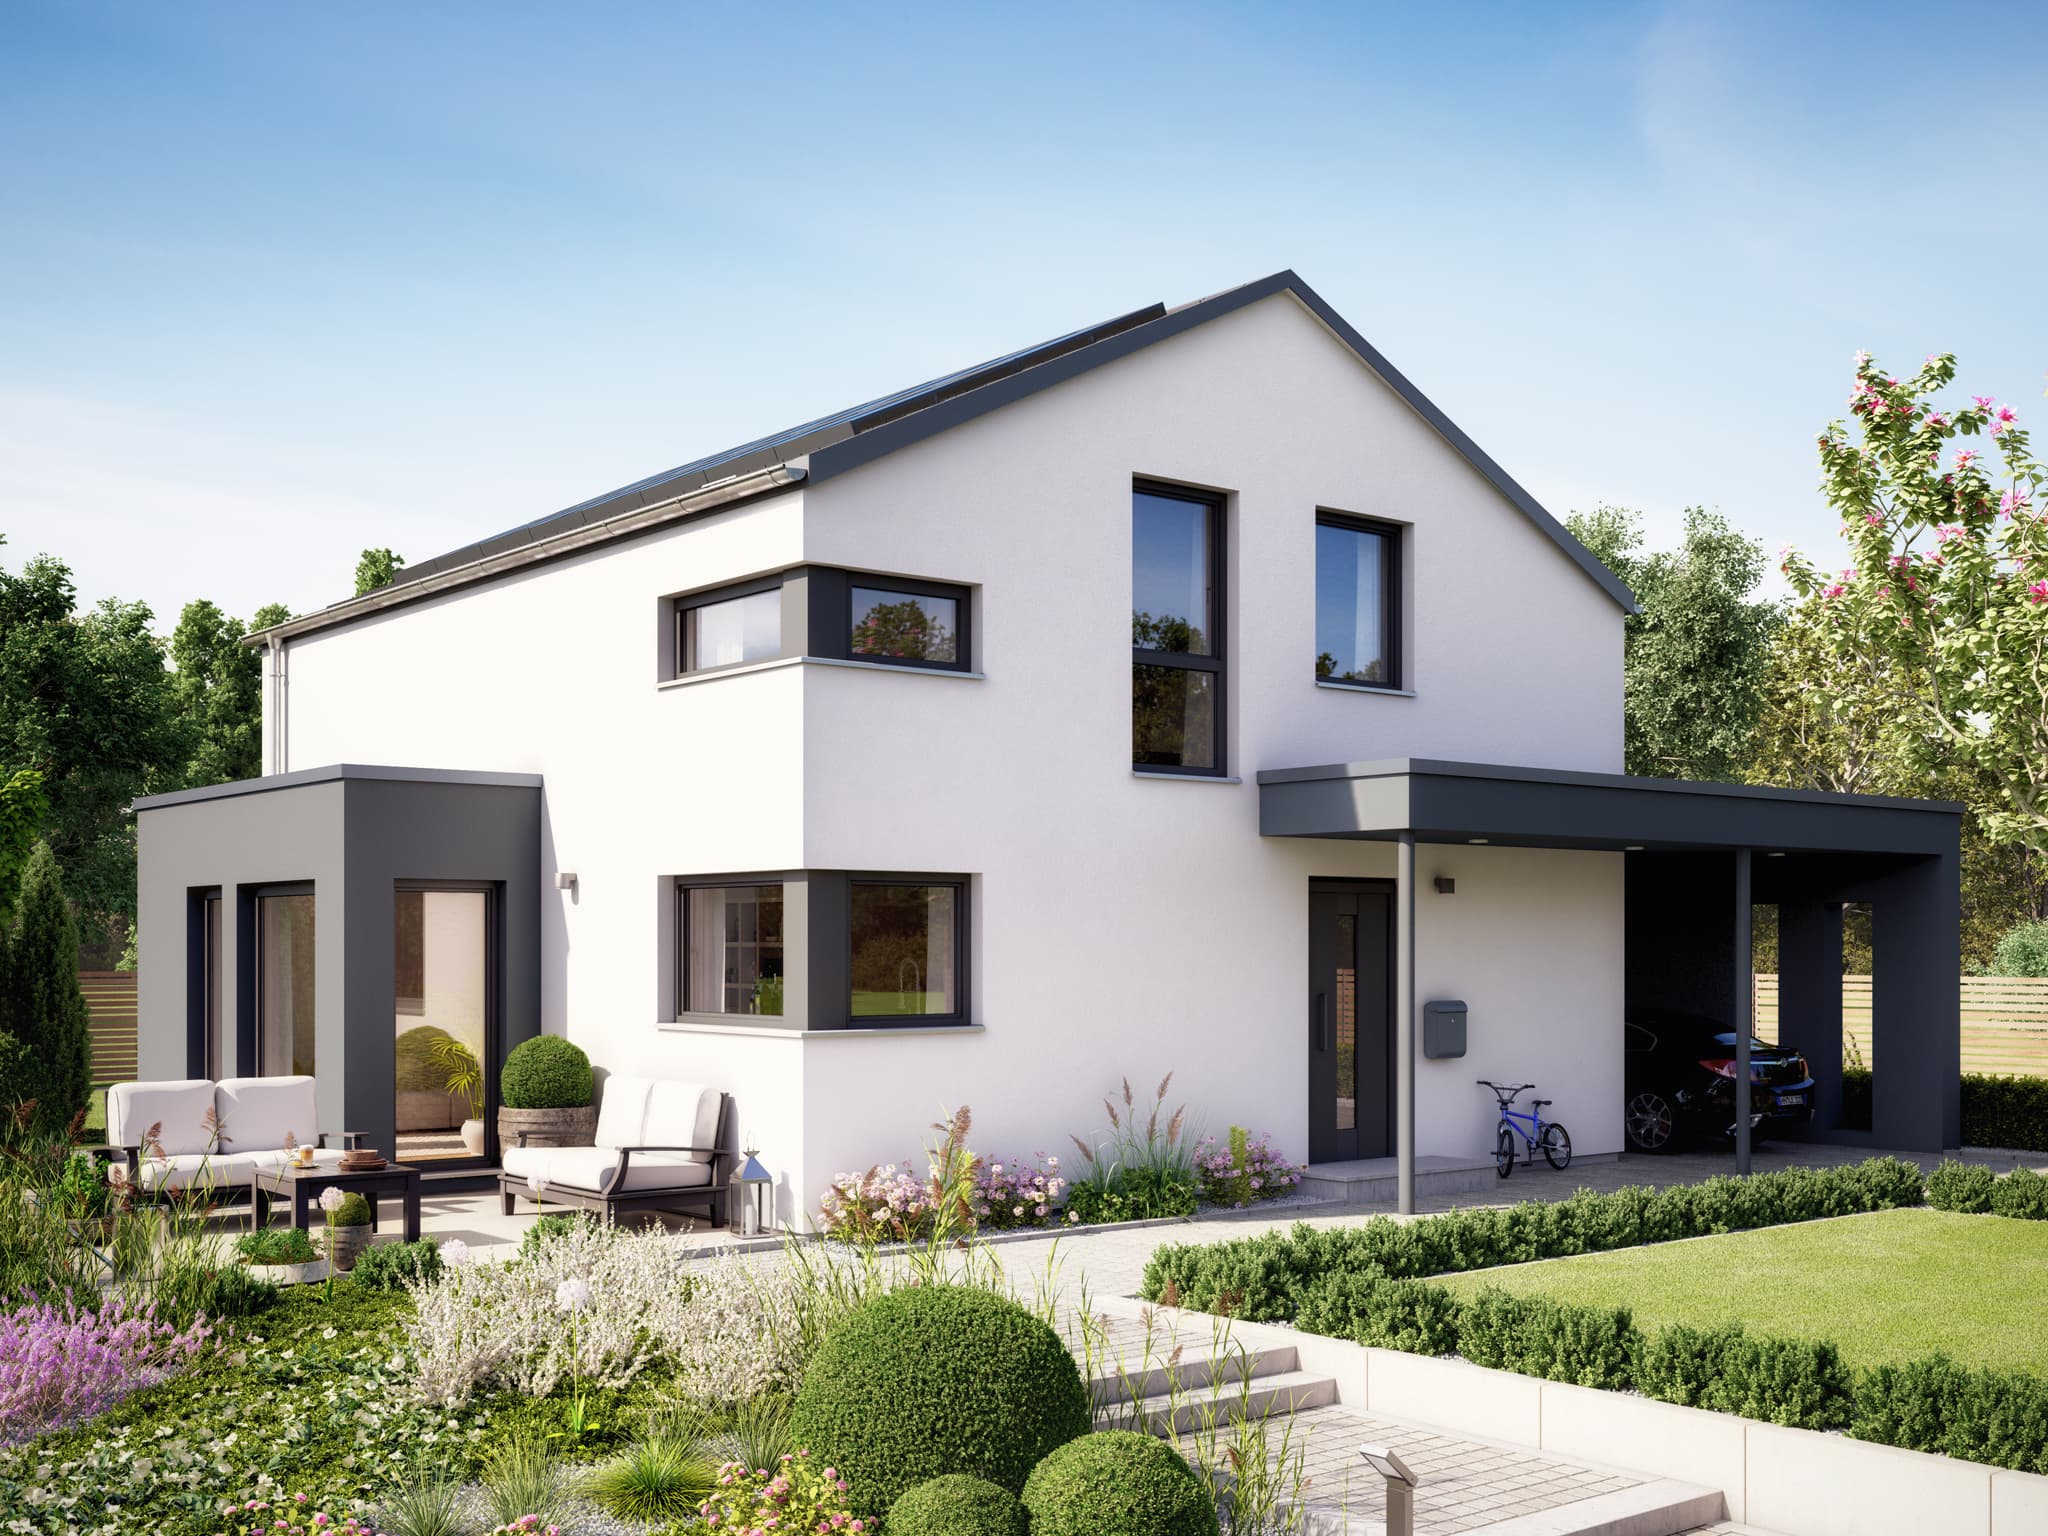 Einfamilienhaus modern mit Satteldach, Carport & Erker, 5 Zimmer, 145 qm - Living Haus Fertighaus SUNSHINE 143 V5 - HausbauDirekt.de